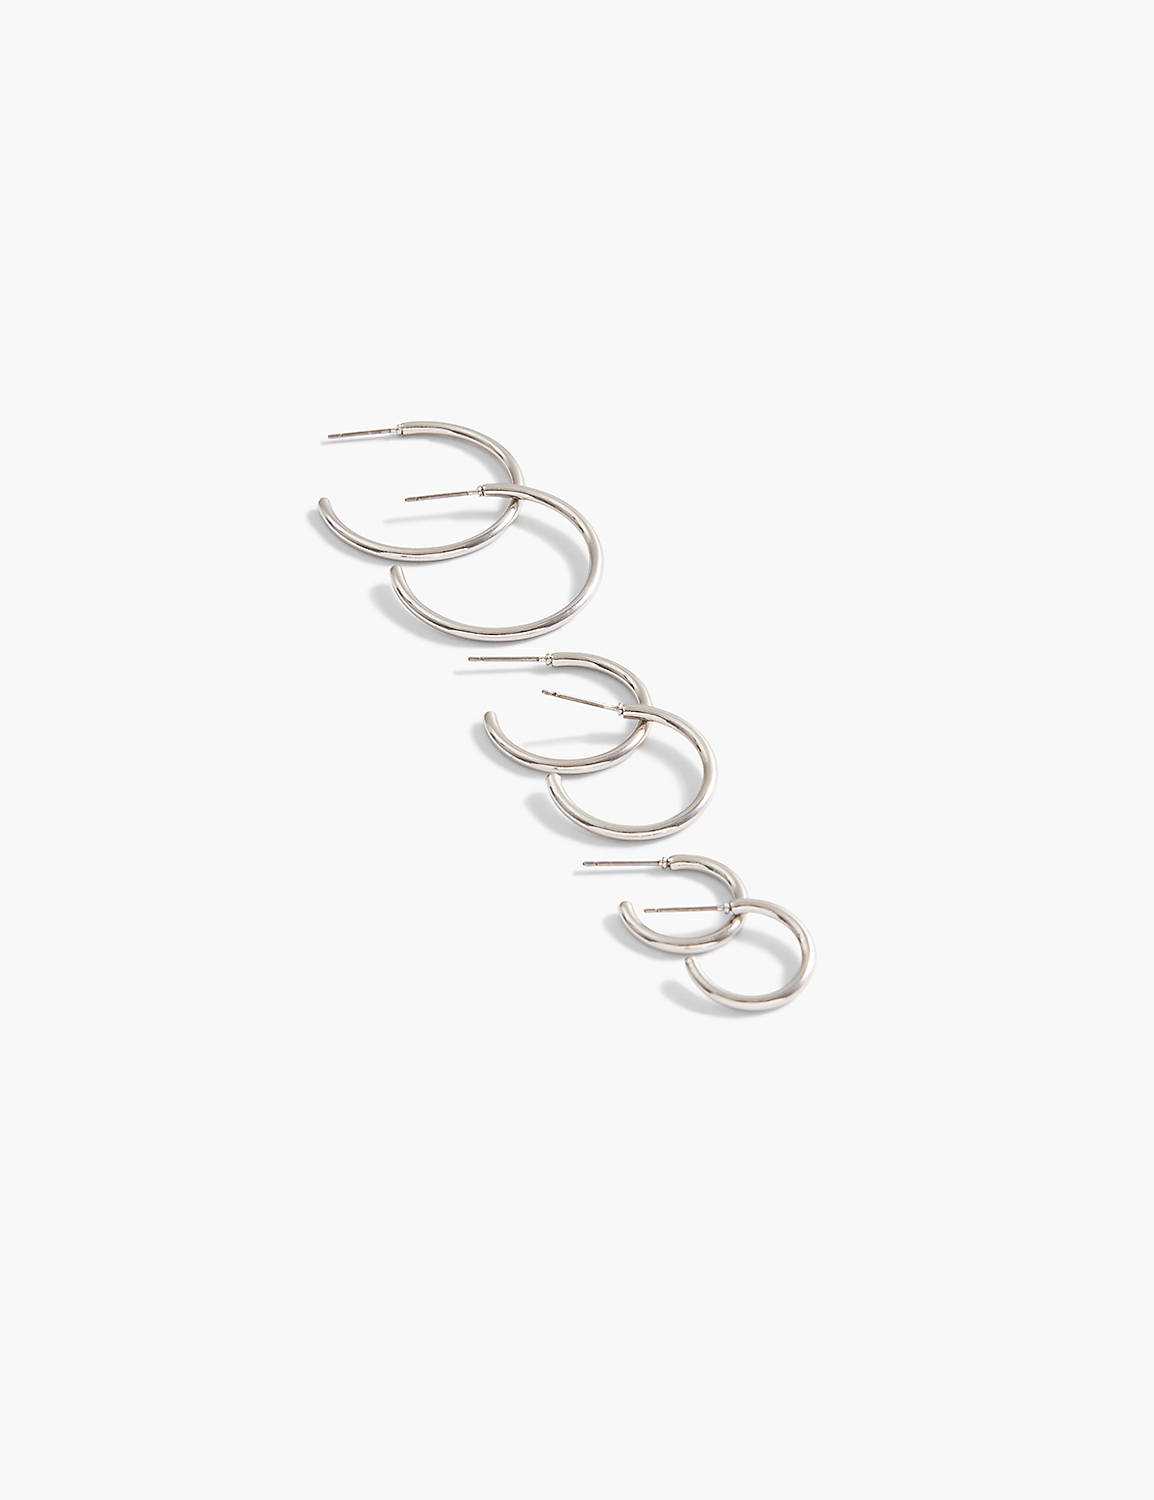 Open Hoop 3 Earring Pack Product Image 1